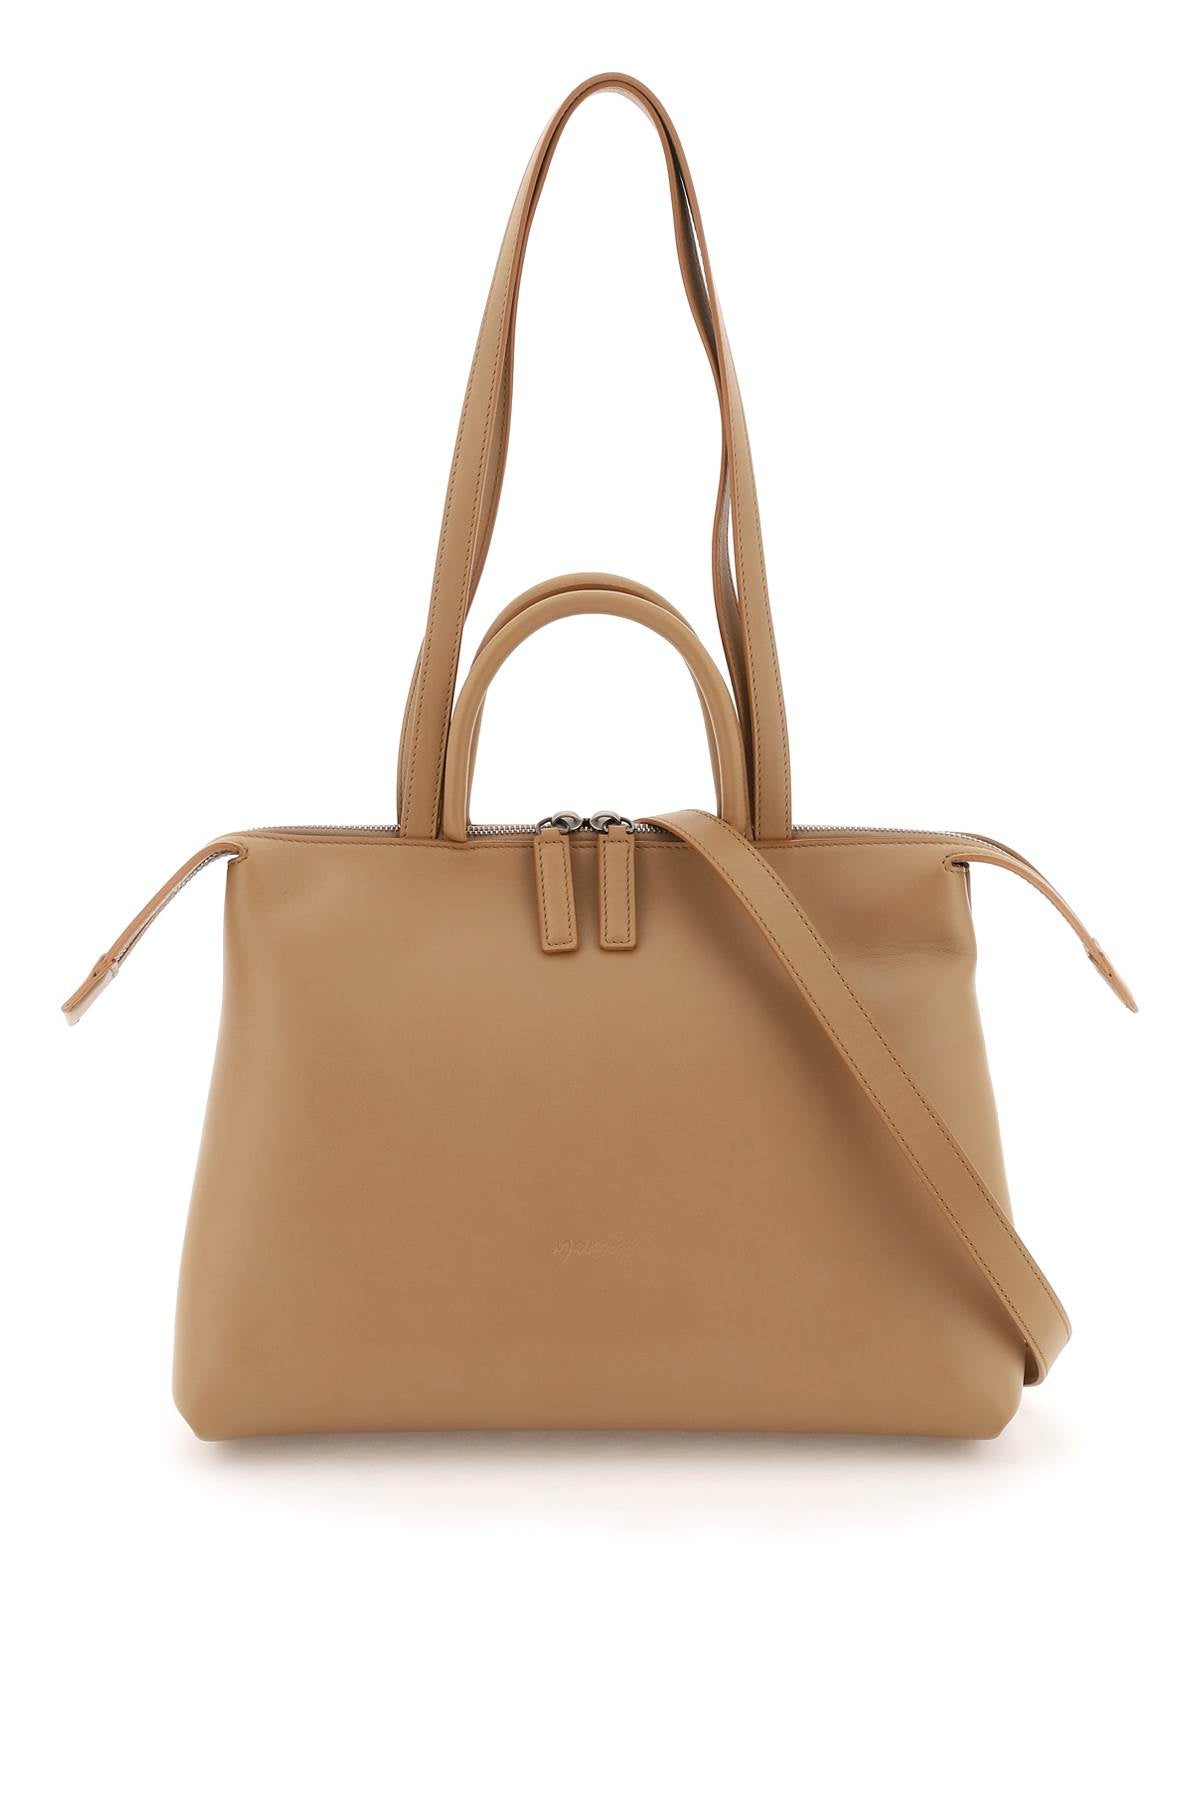 4 Dritta Leather Shoulder Handbag for Women - Brown